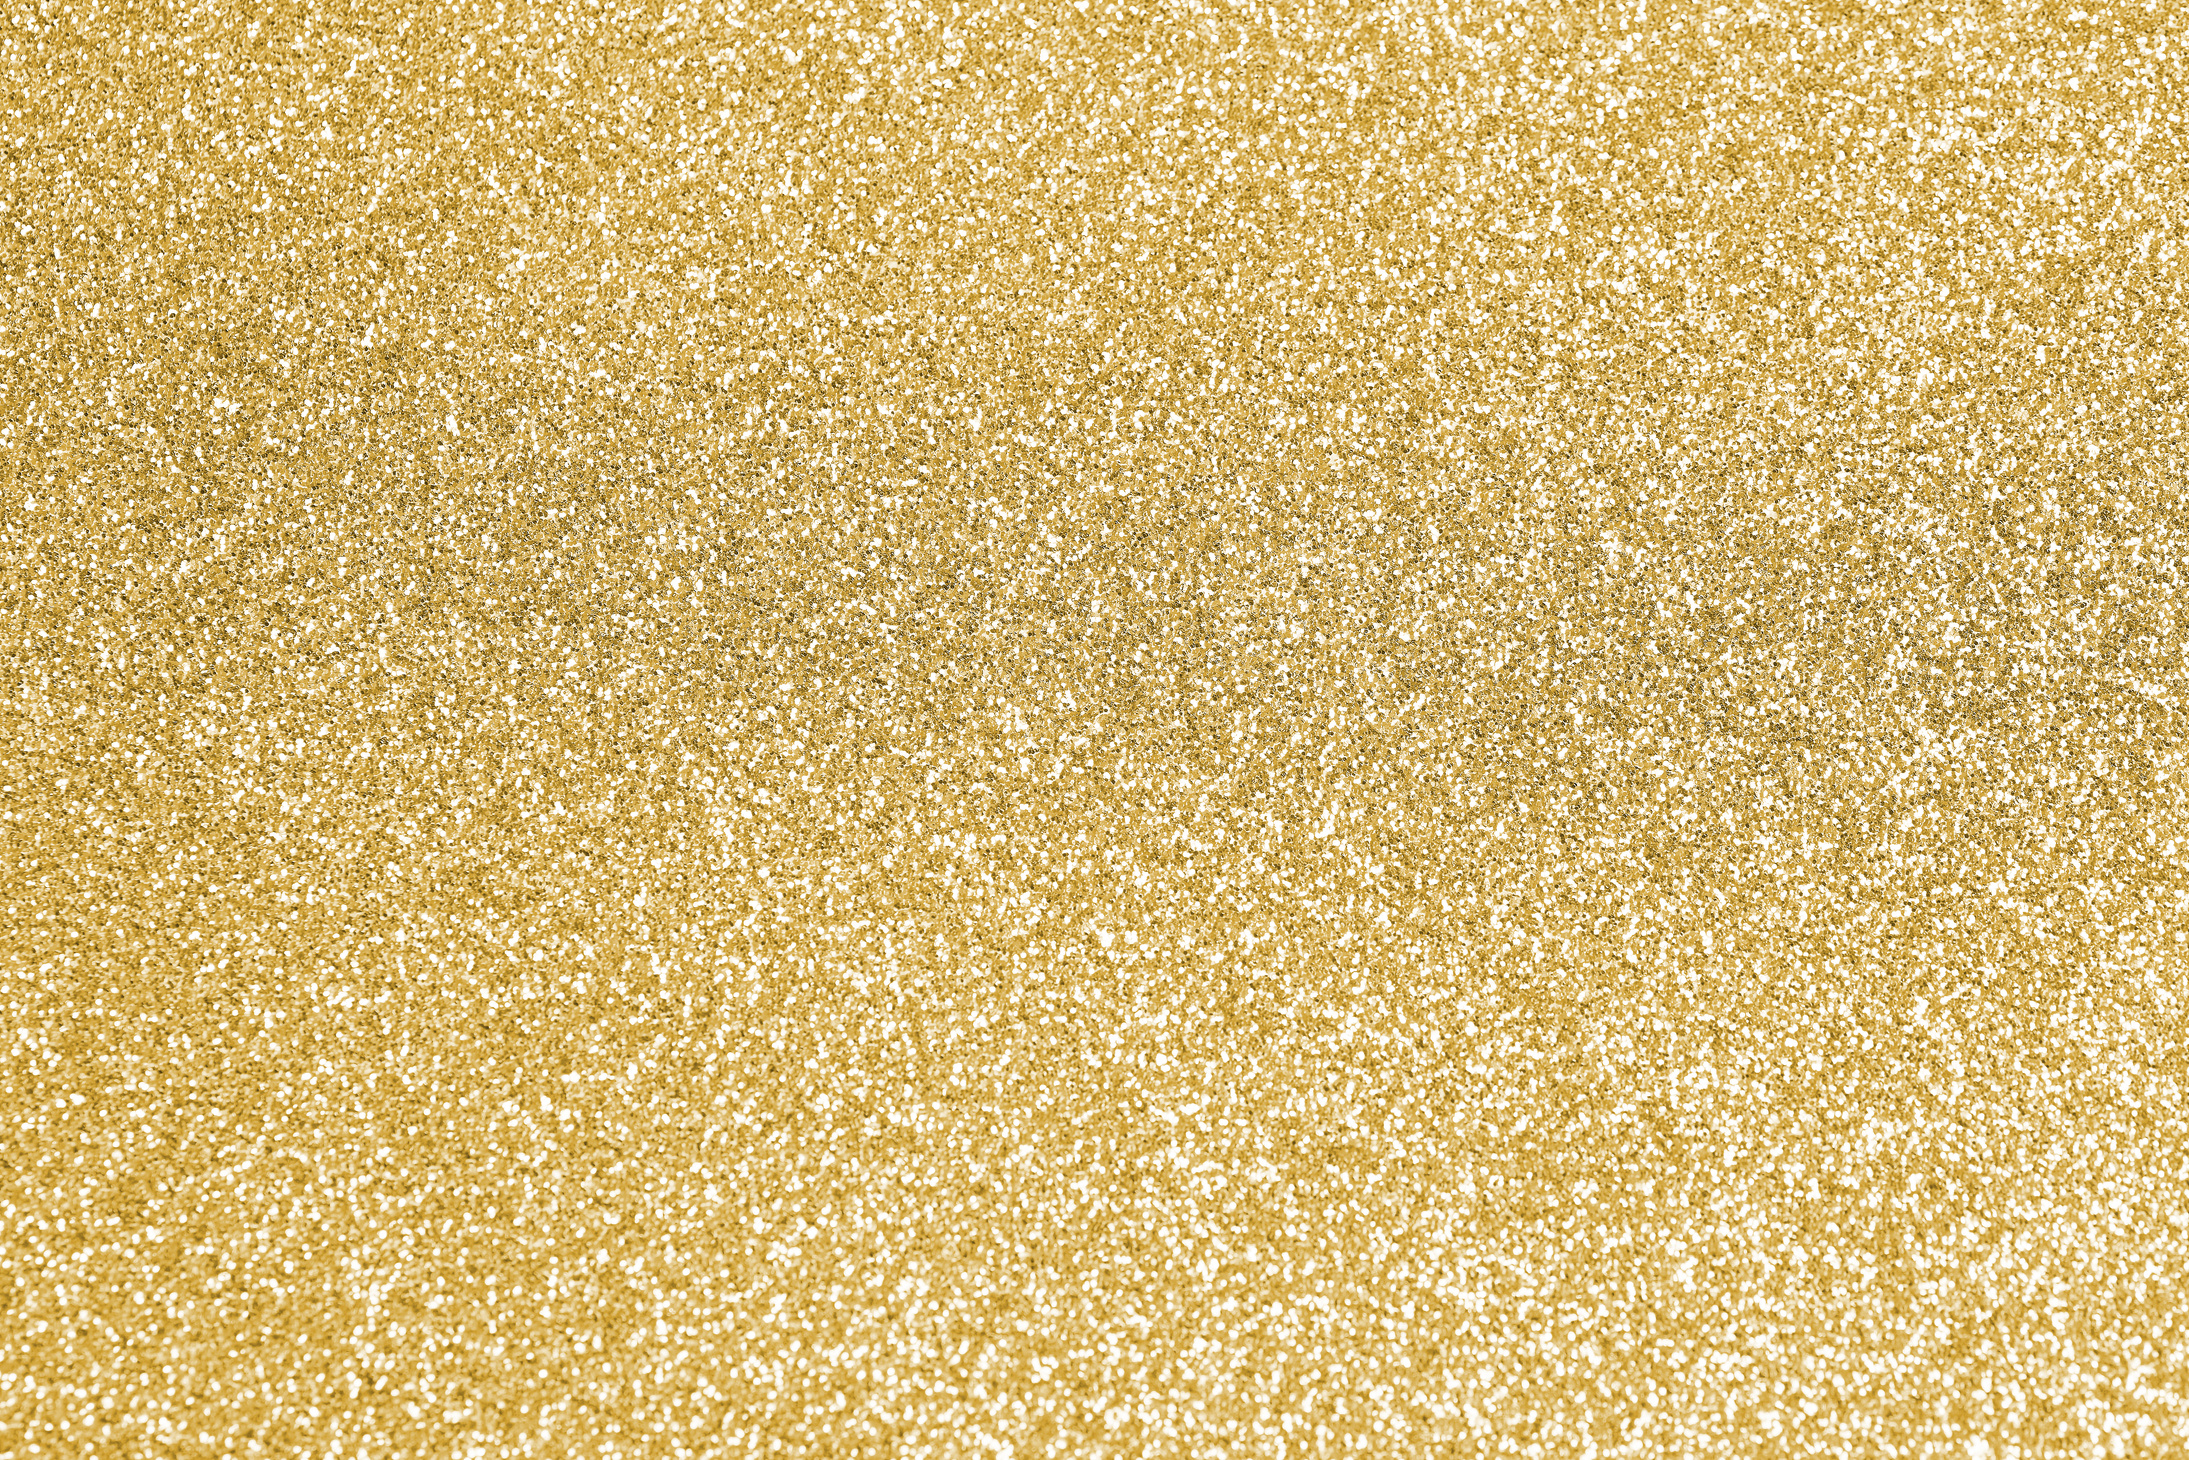 Gold Glitter texture background